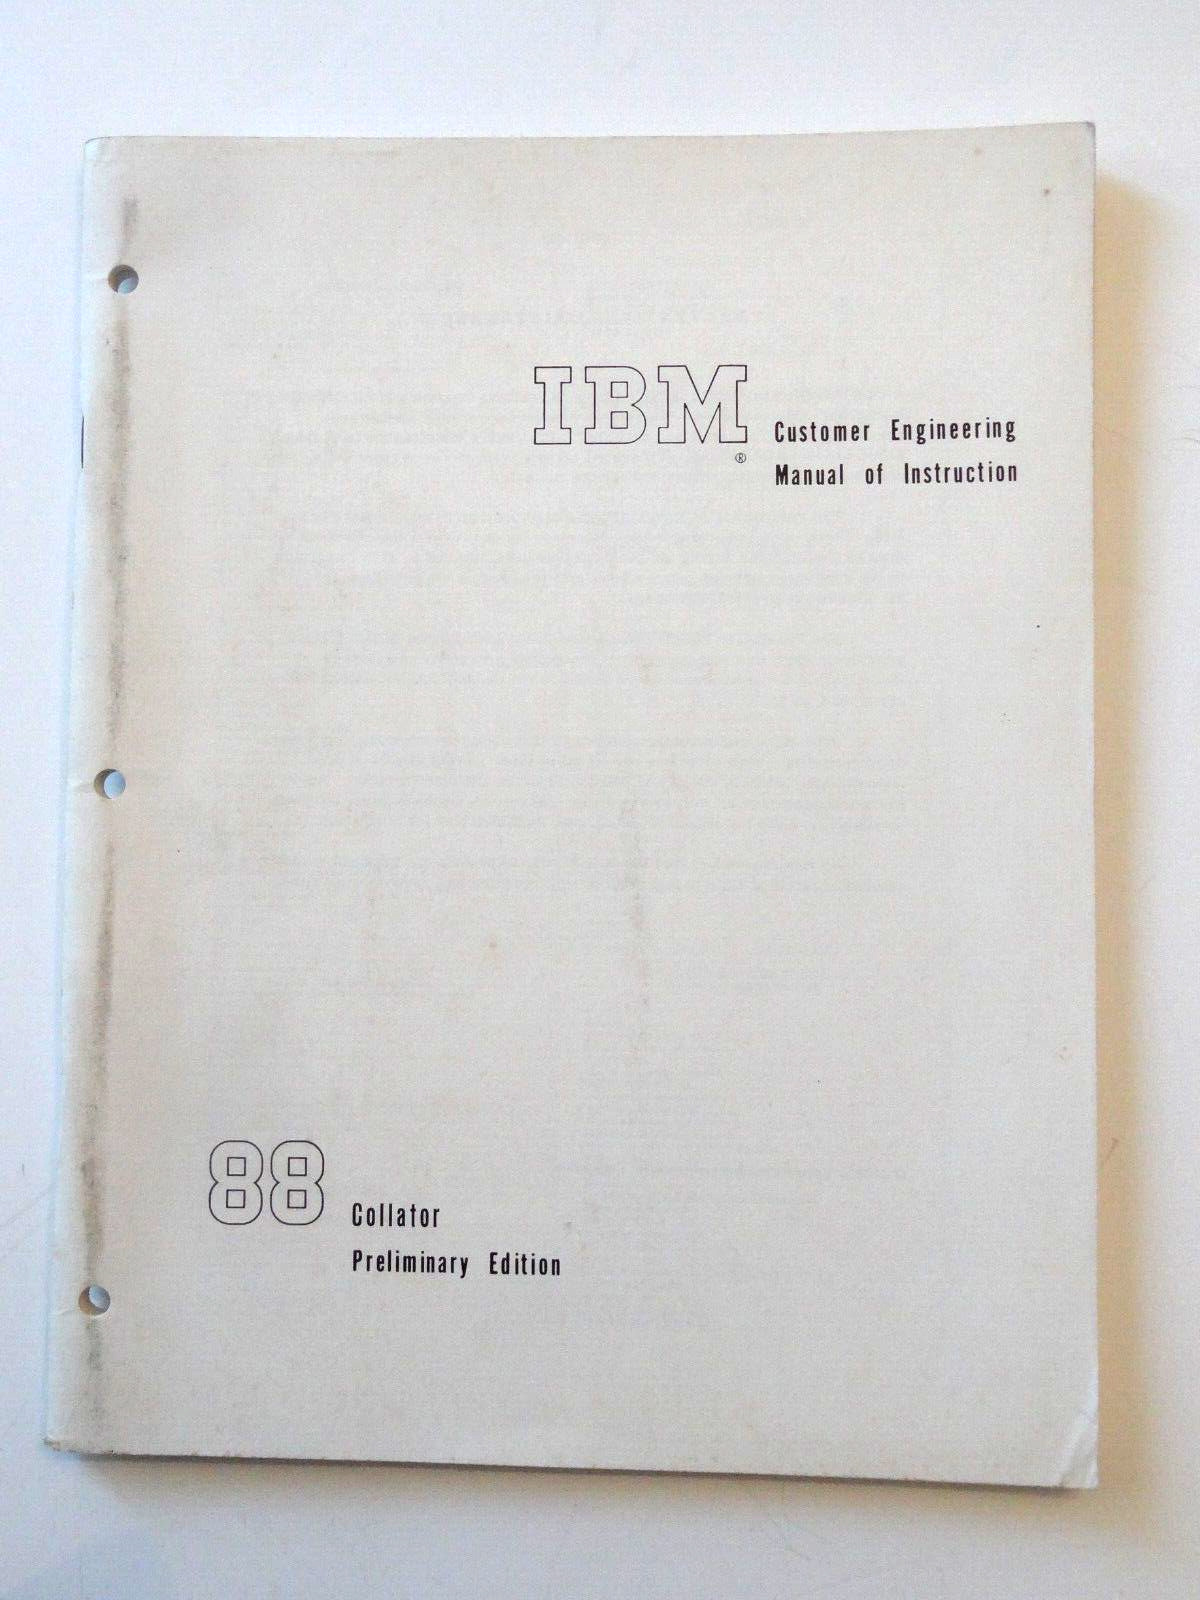 IBM 88 Collator Preliminary Edition Customer Engineering Manual of Instruction